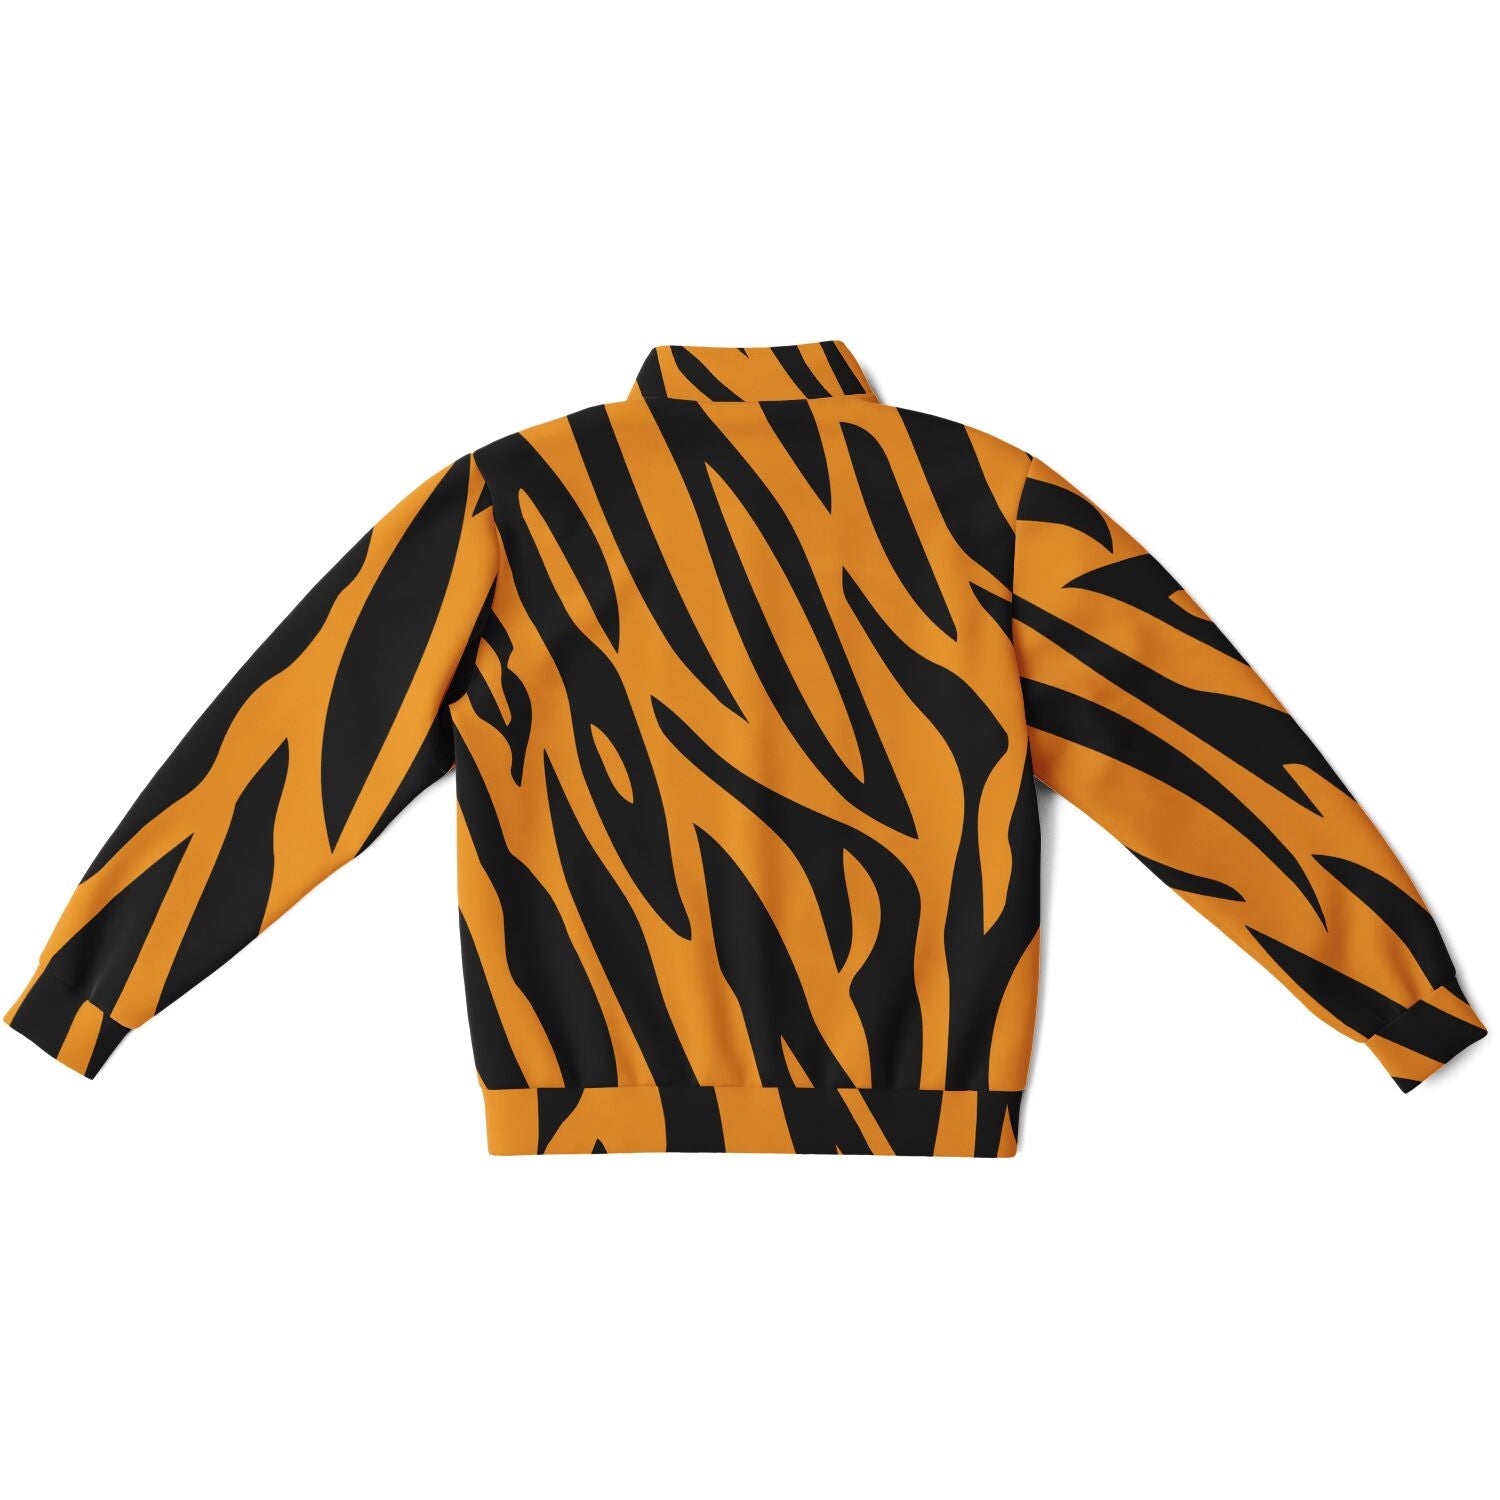 Tiger Track Jacket | Orange & Black HD Print